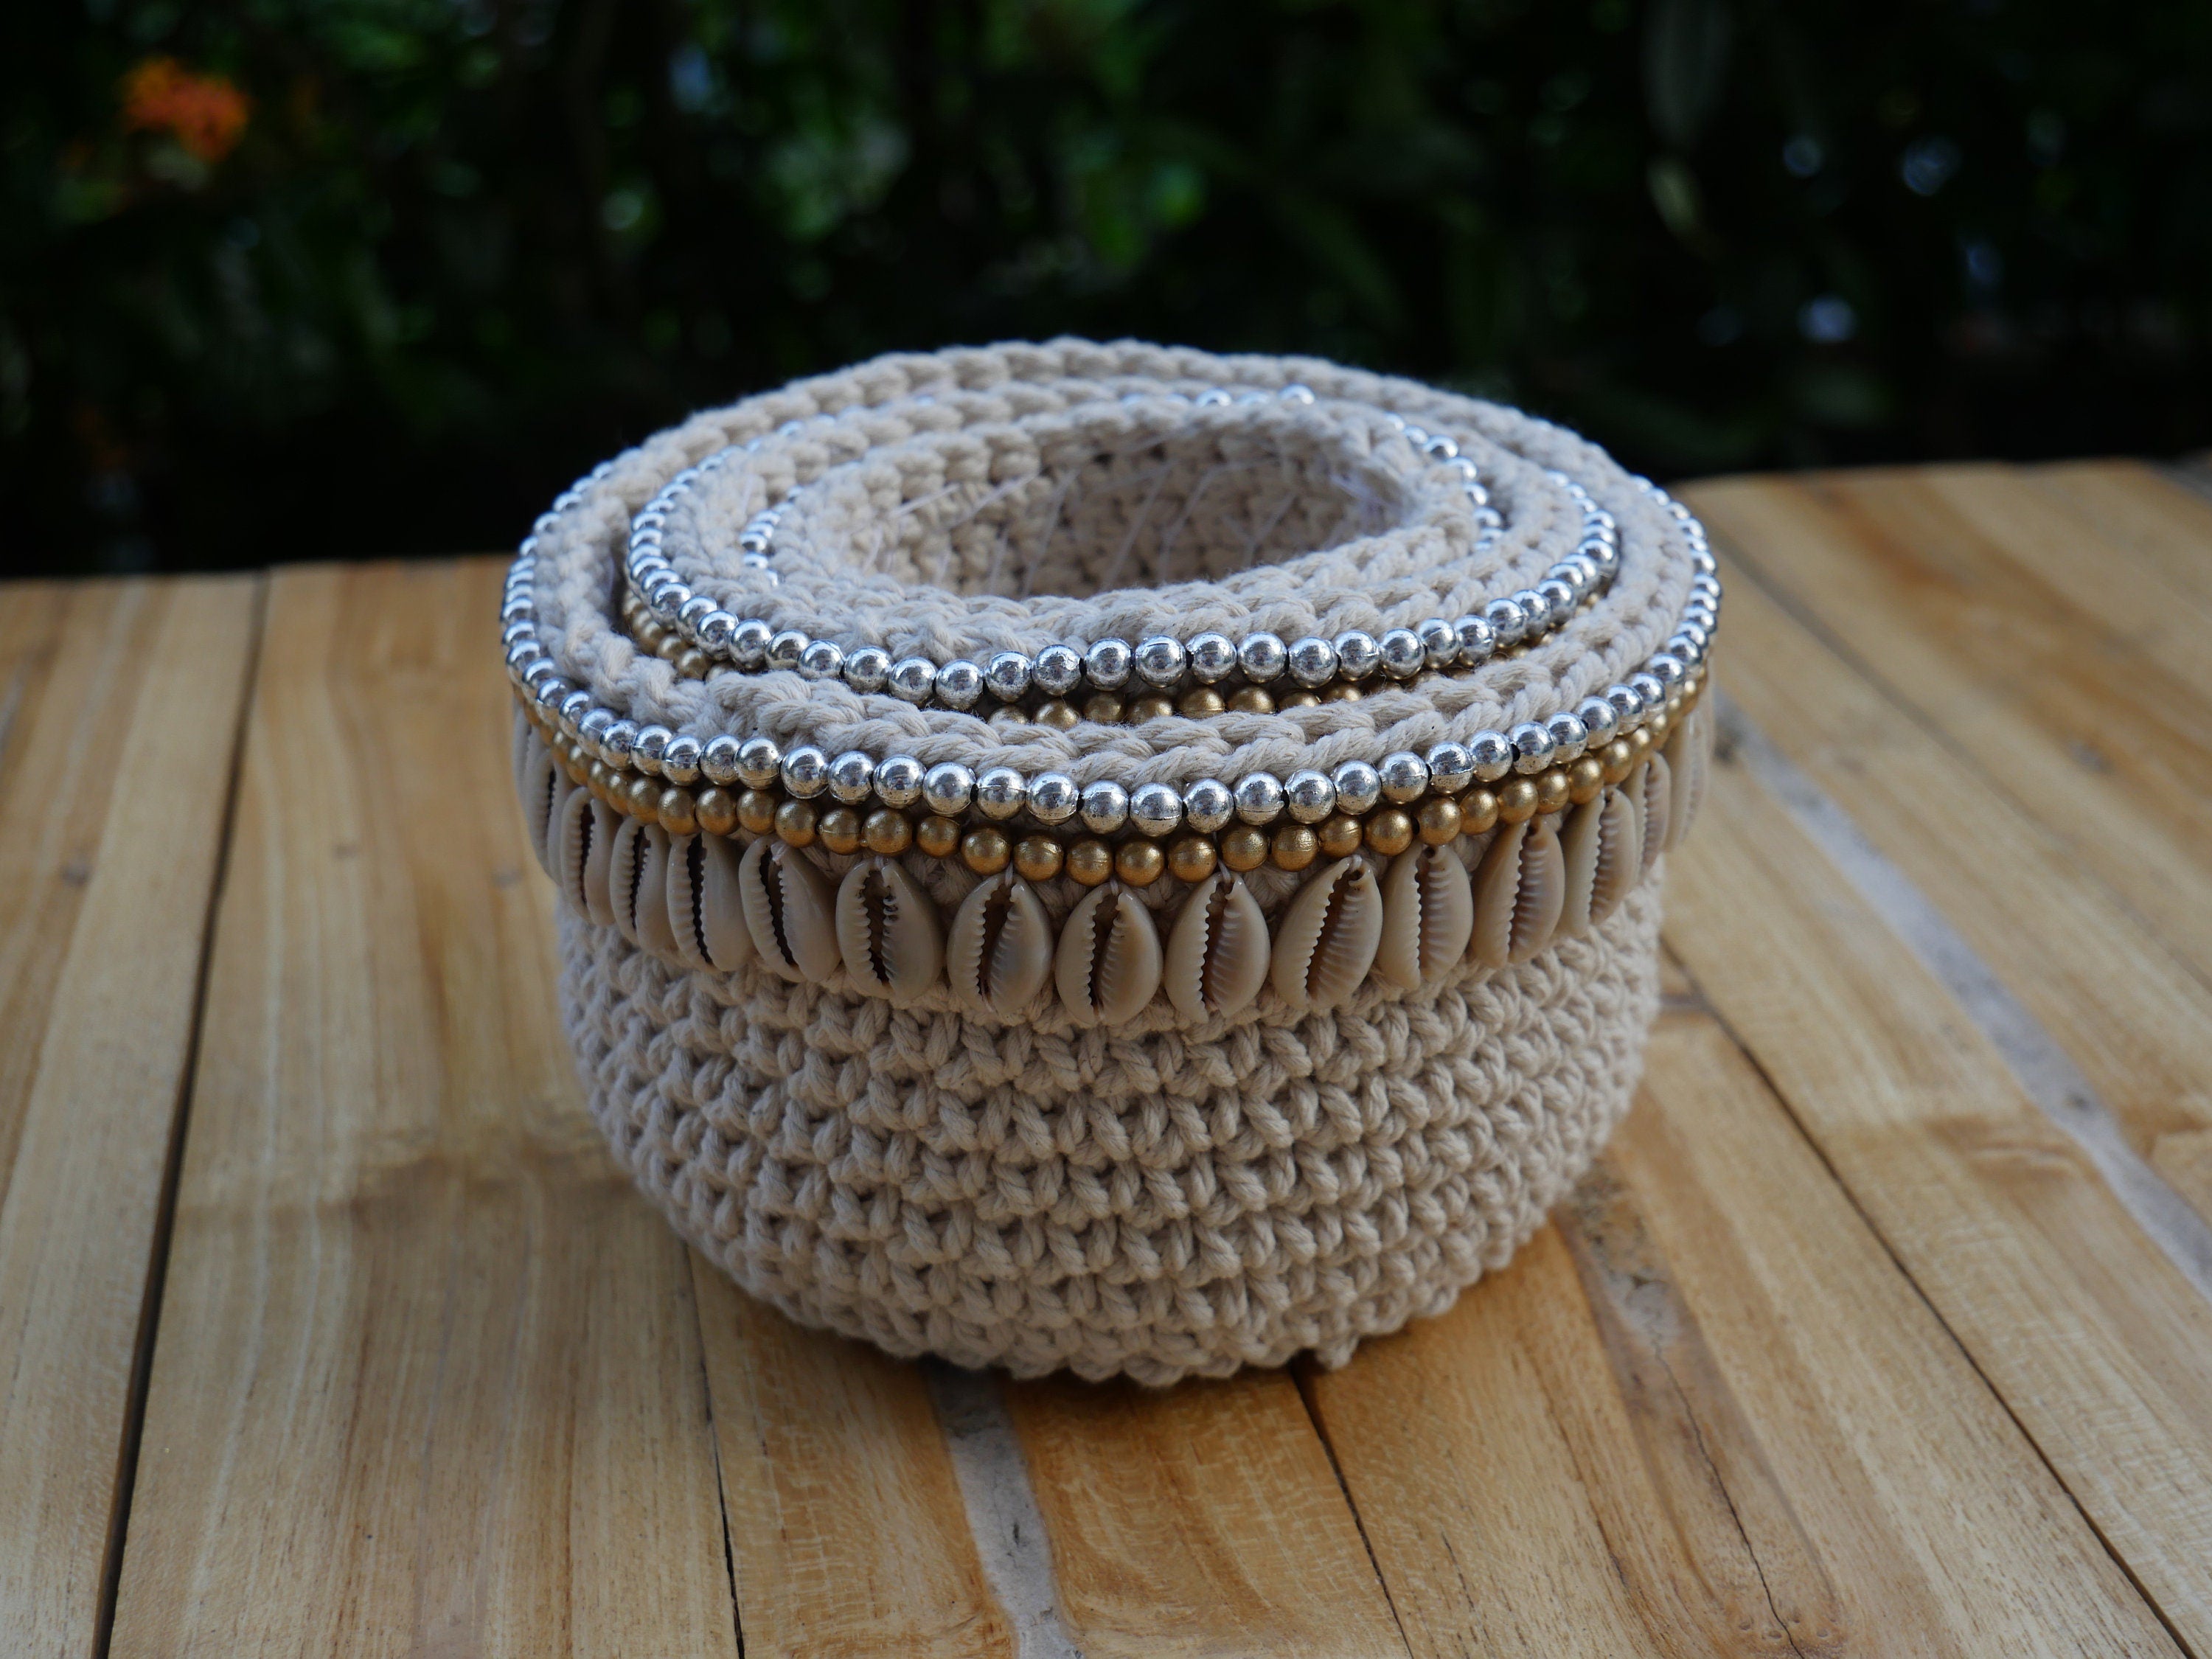 Set of 3 Macrame Crochet Baskets. Cowrie Shell Decor. Handmade. Storage Basket. Makeup Organizer. Bathroom Decor. Nursery Decor